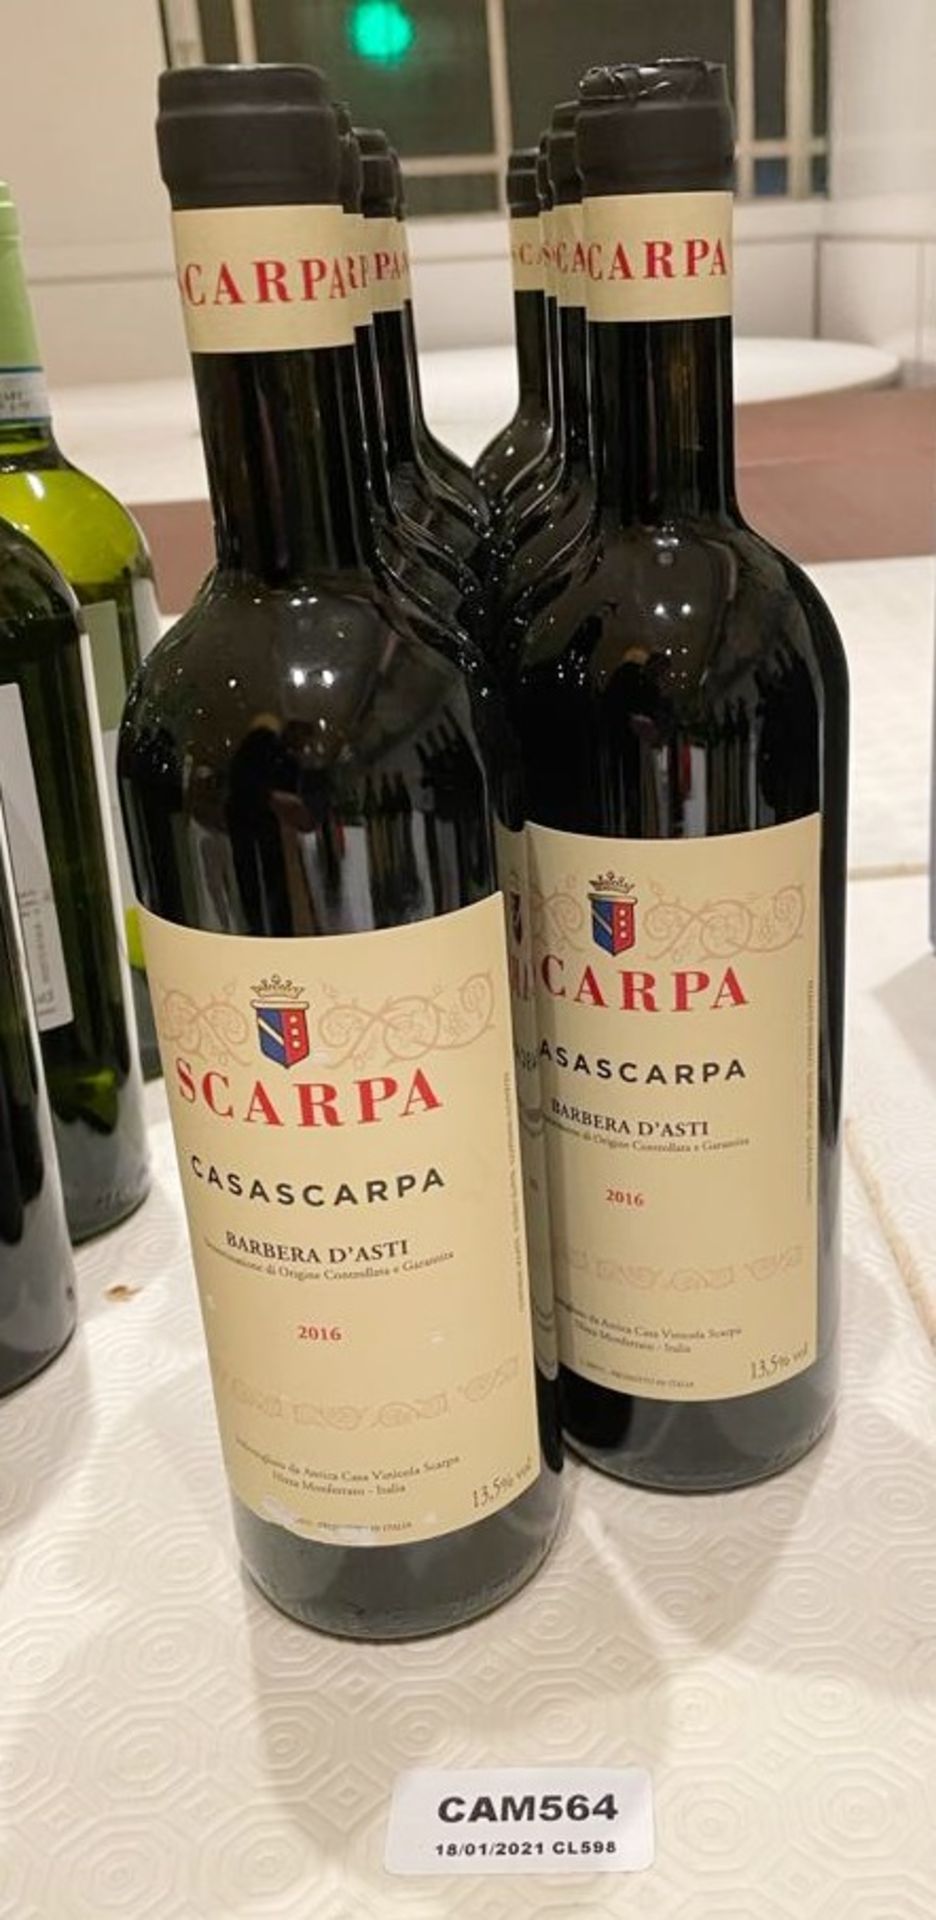 8 x Bottles Of SCARDA BARBERA D'ASTI - 2016 - 75cl - New/Unopened Restaurant Stock - Ref: CAM564